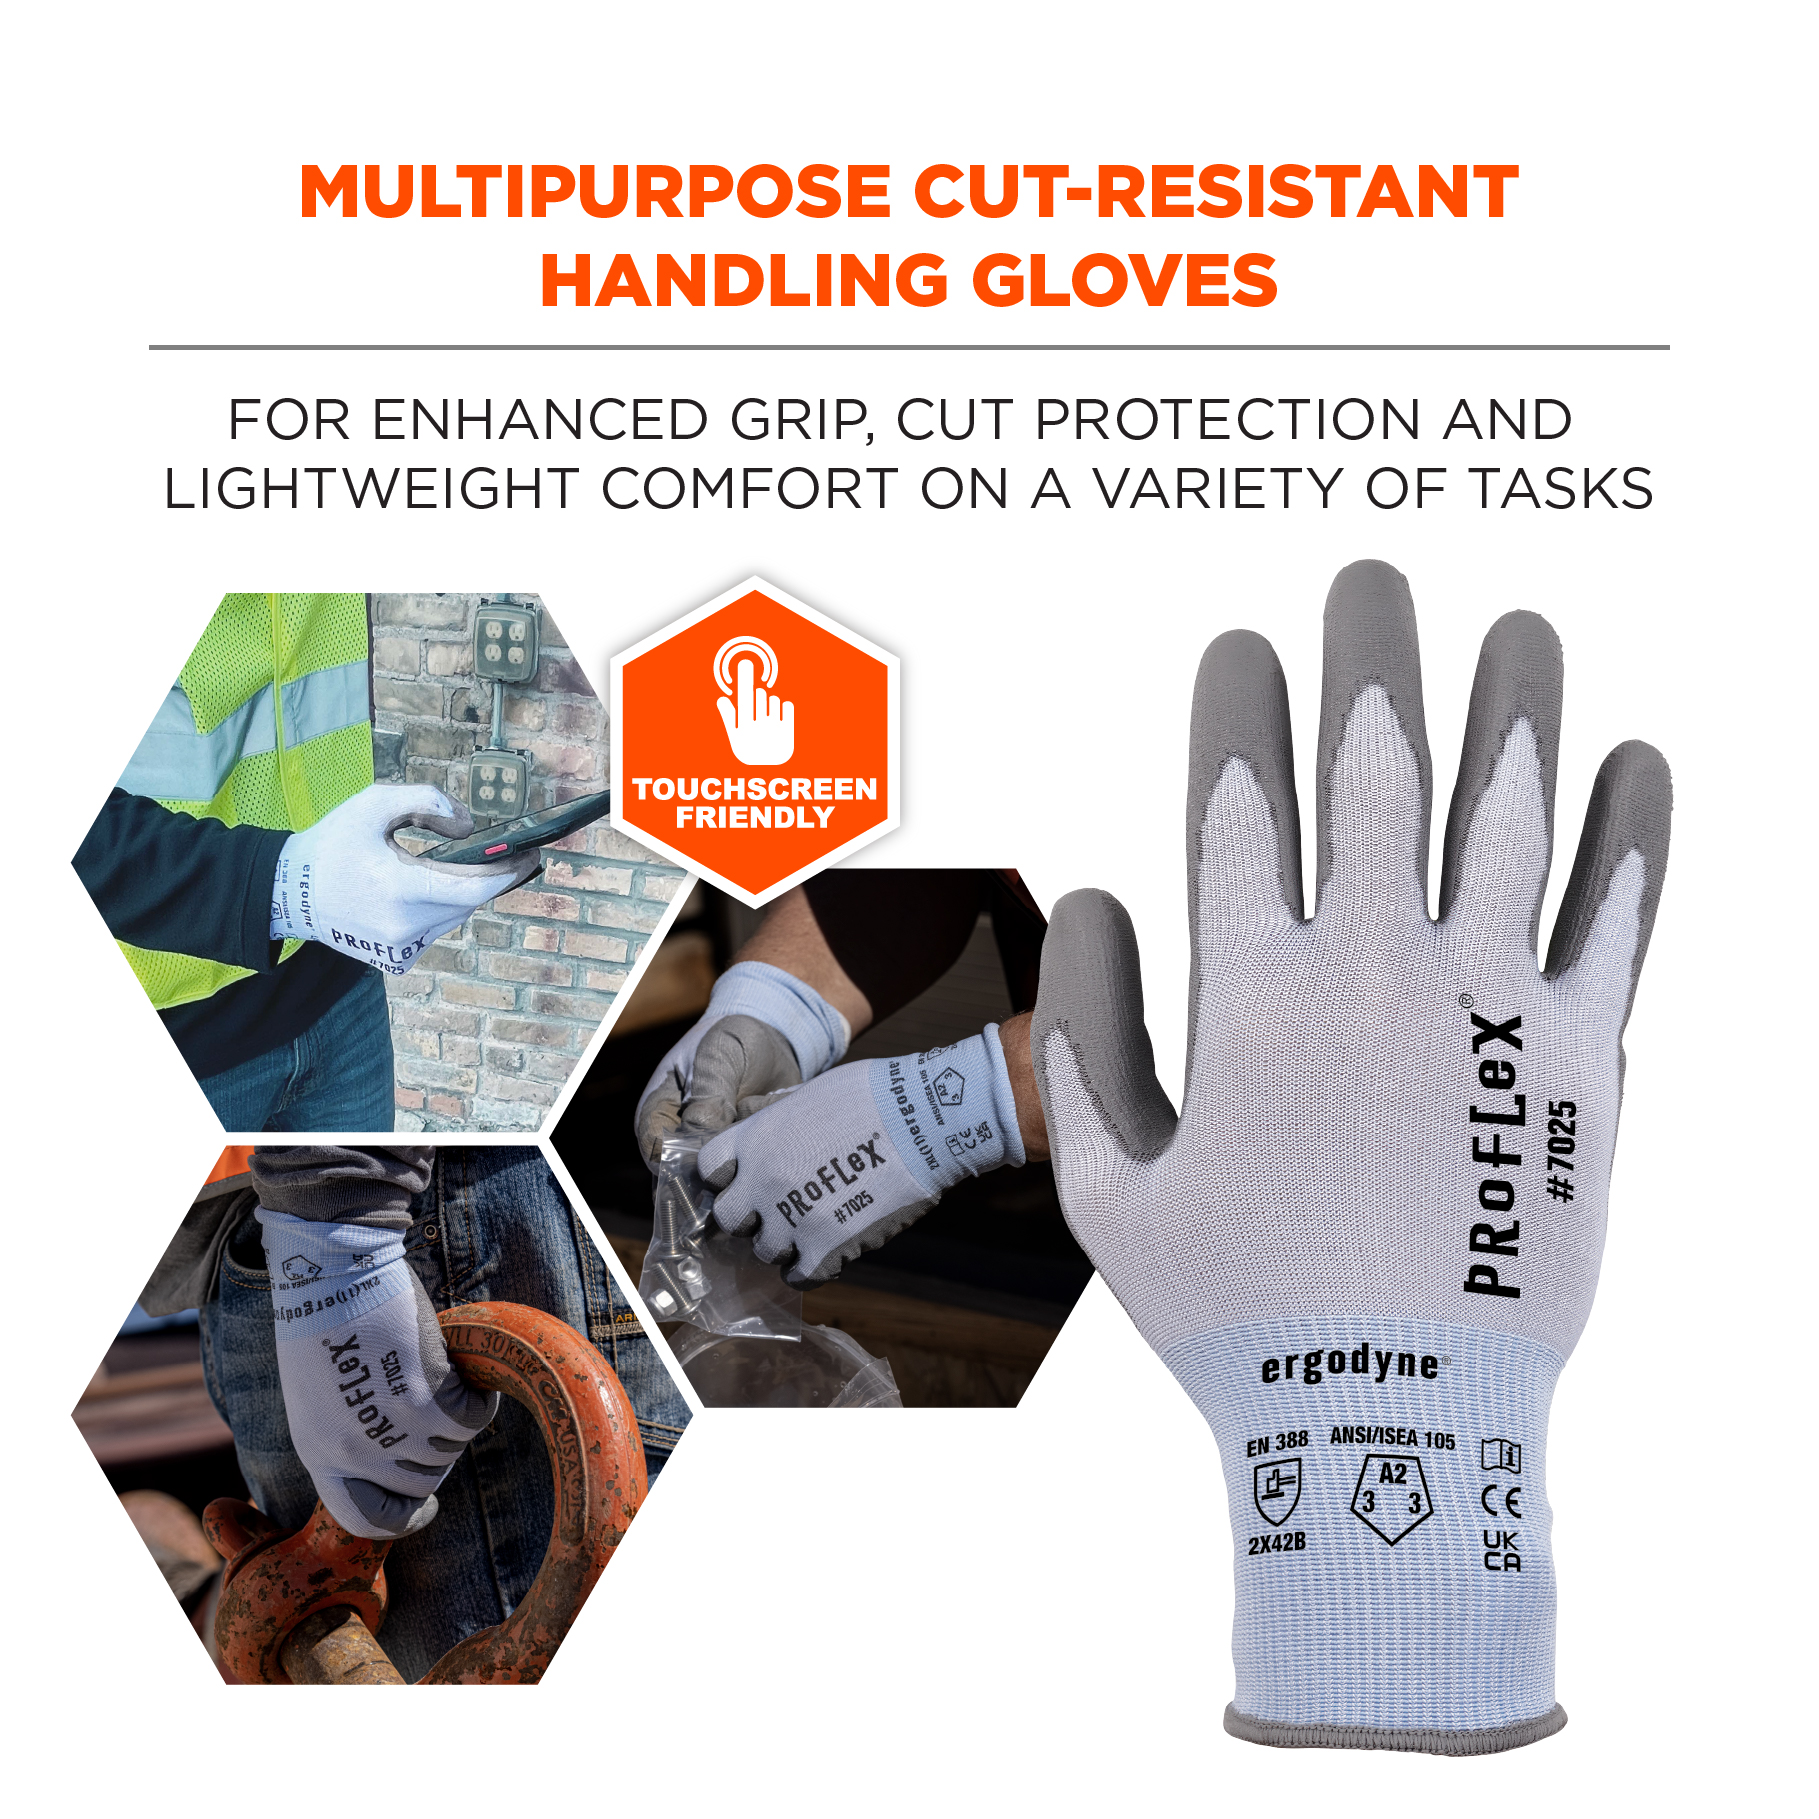 https://www.ergodyne.com/sites/default/files/product-images/10432-7025-ansi-a2-pu-coated-cr-gloves-gray-multipurpose-cut-resistant-handling-gloves_0.jpg